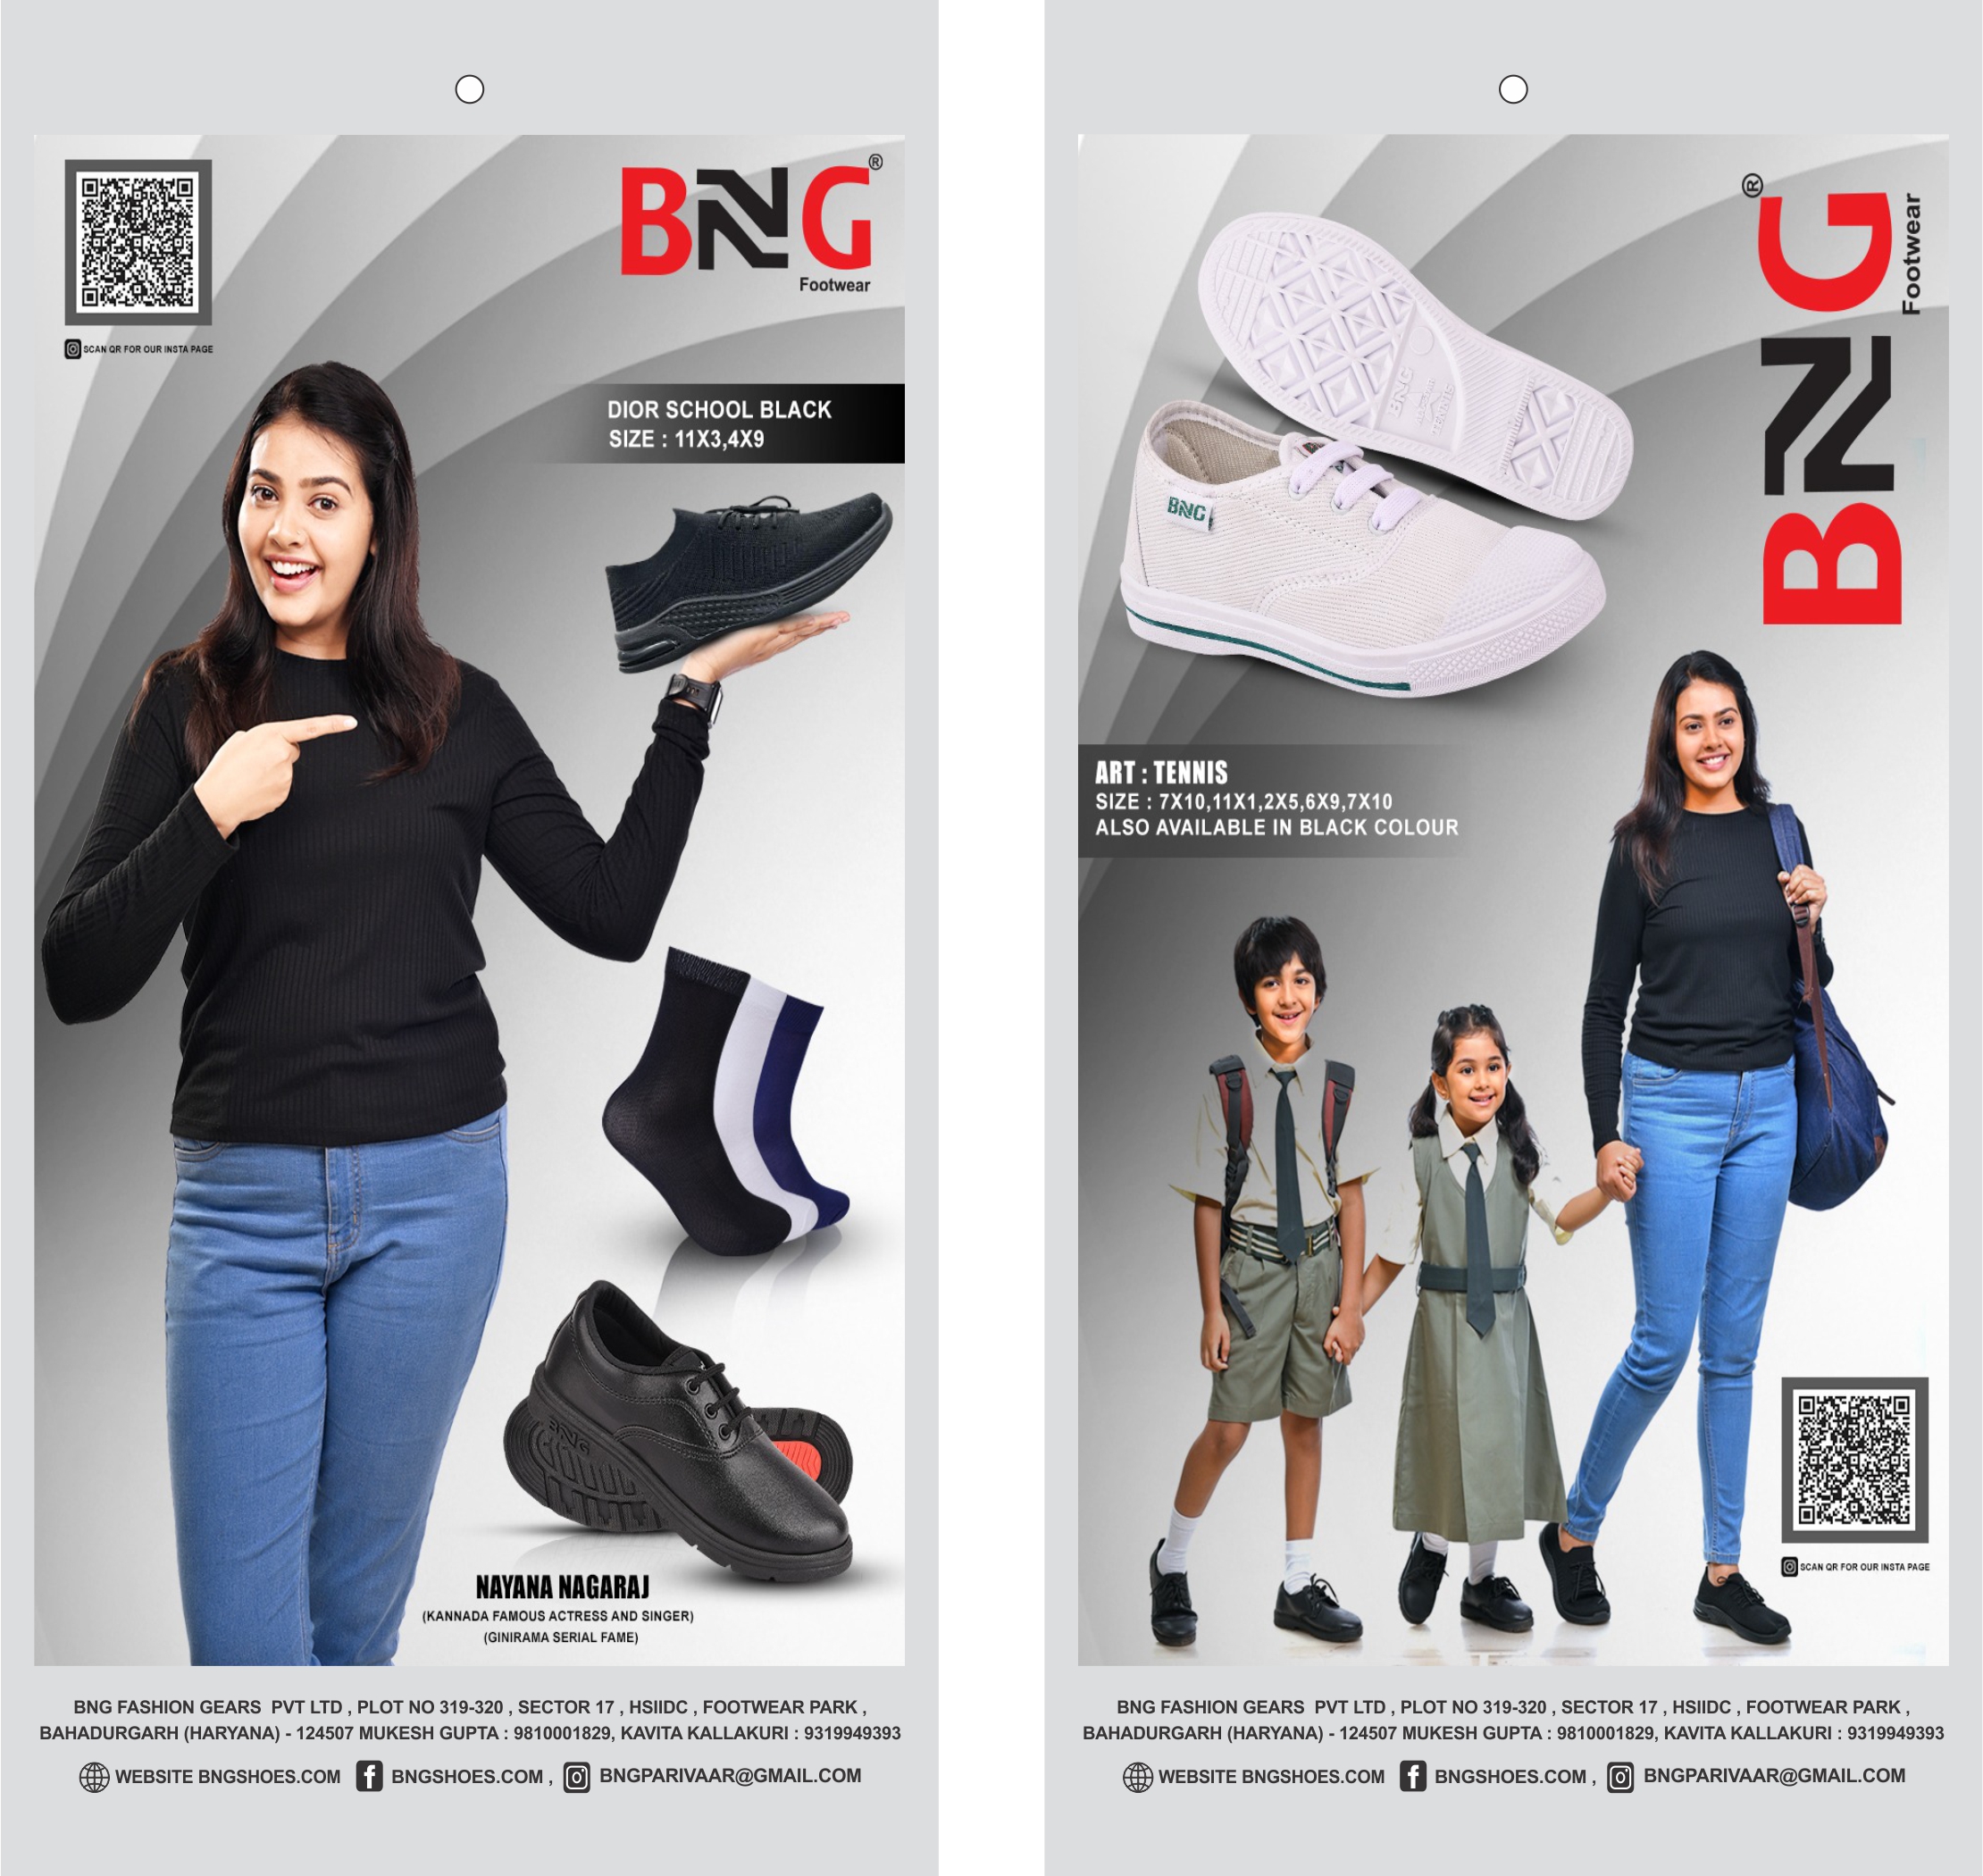 BNG Fashion GEARS Pvt Ltd